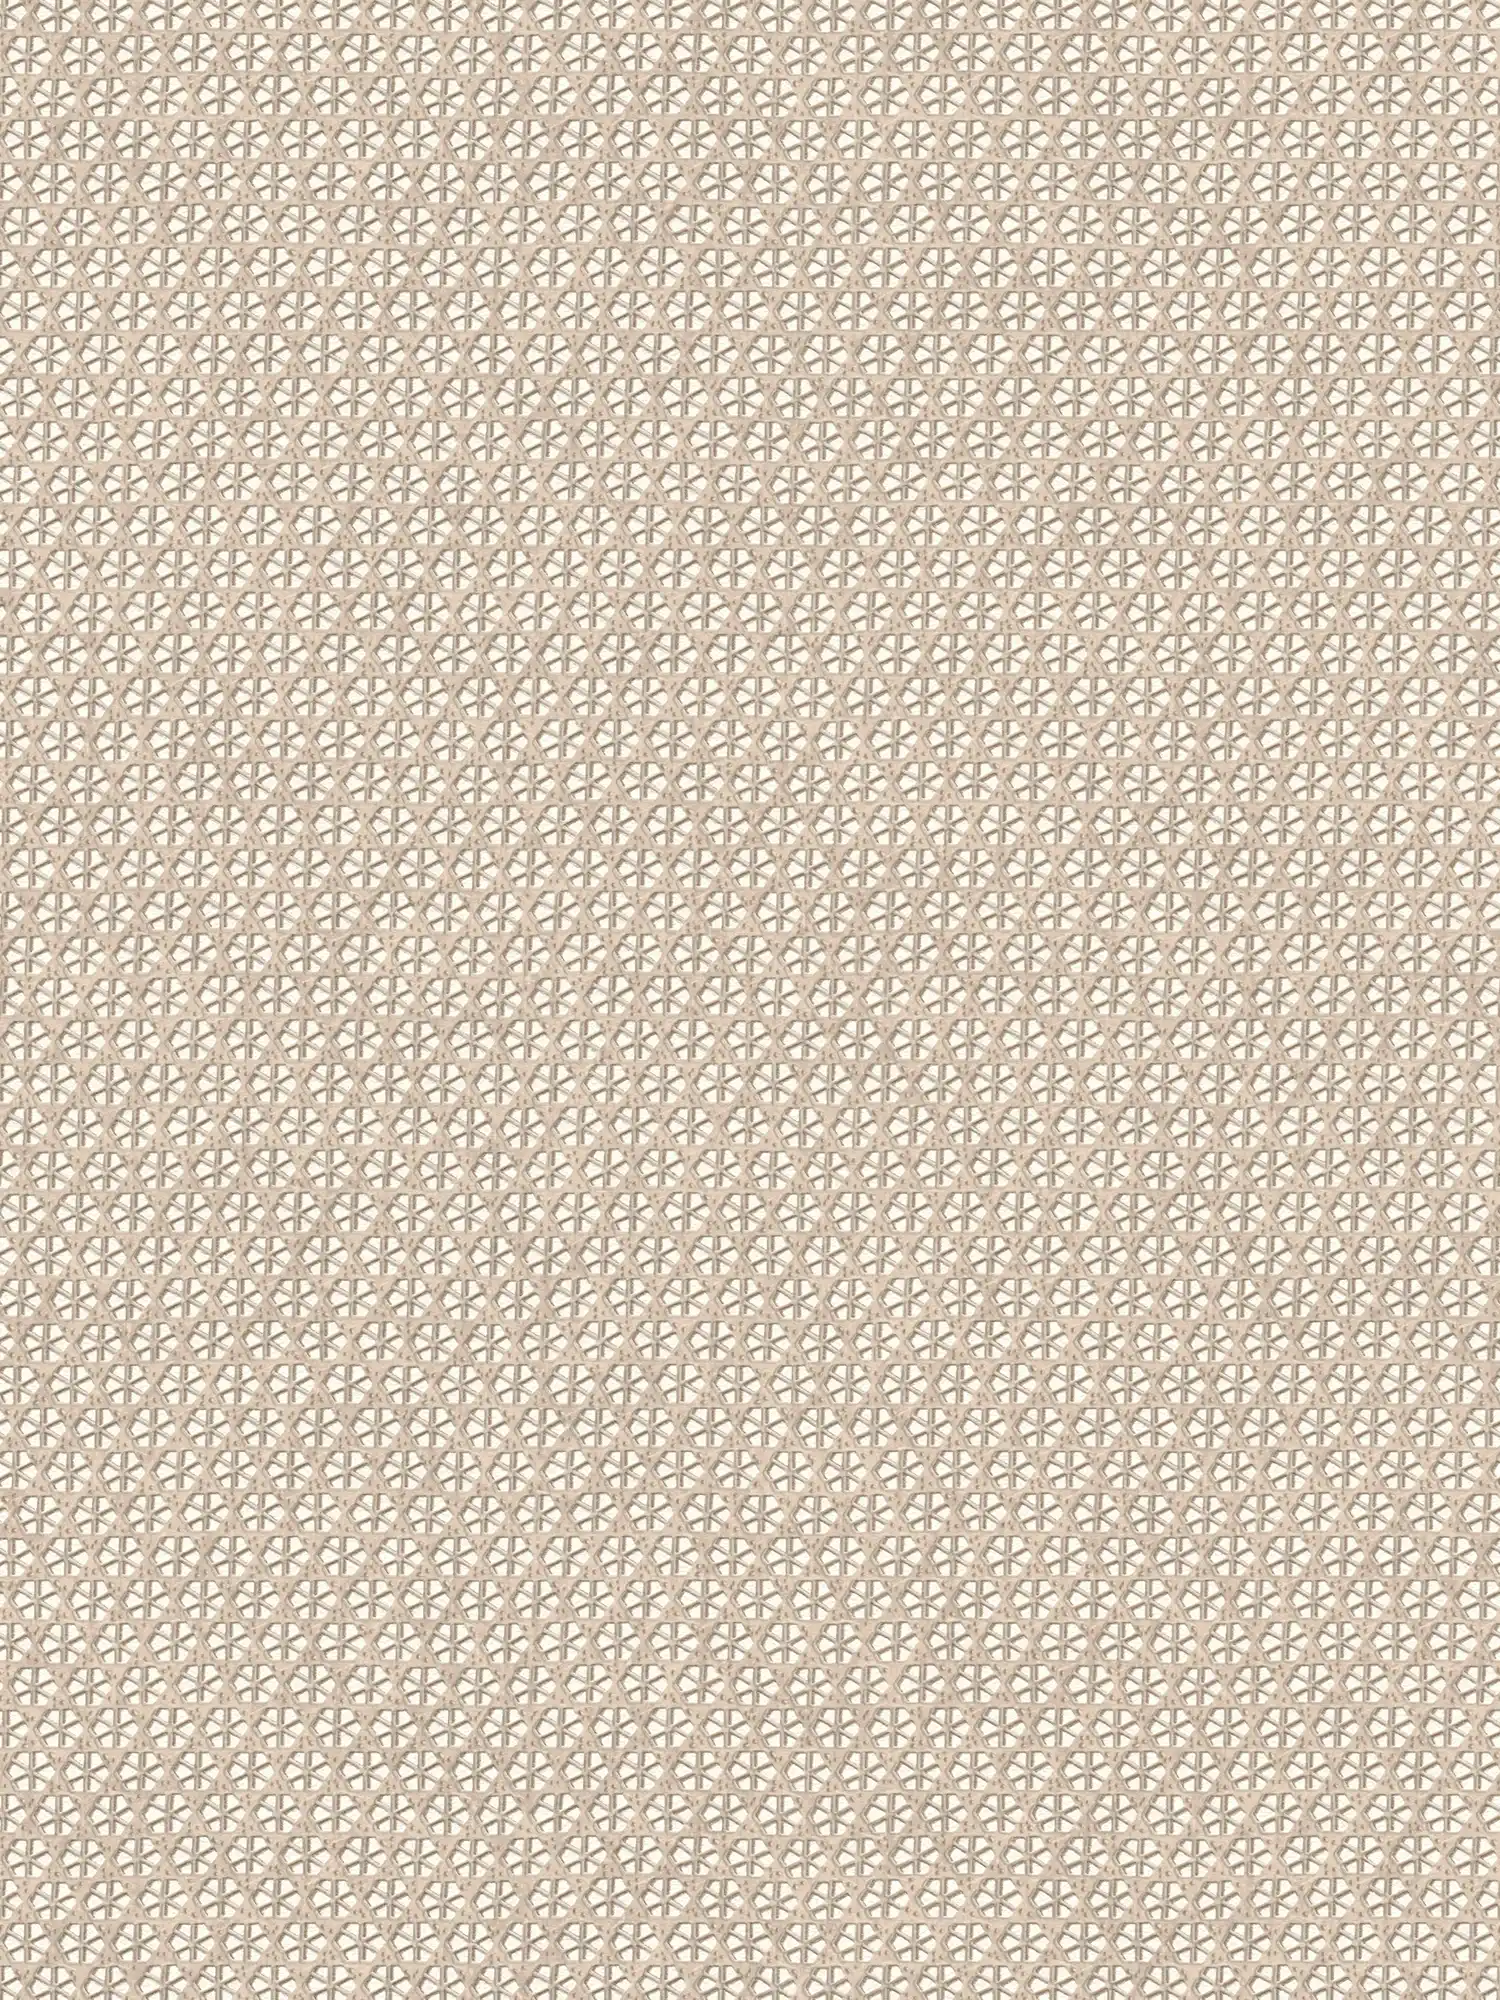 Wallpaper wickerwork pattern rattan look - brown, cream, white
